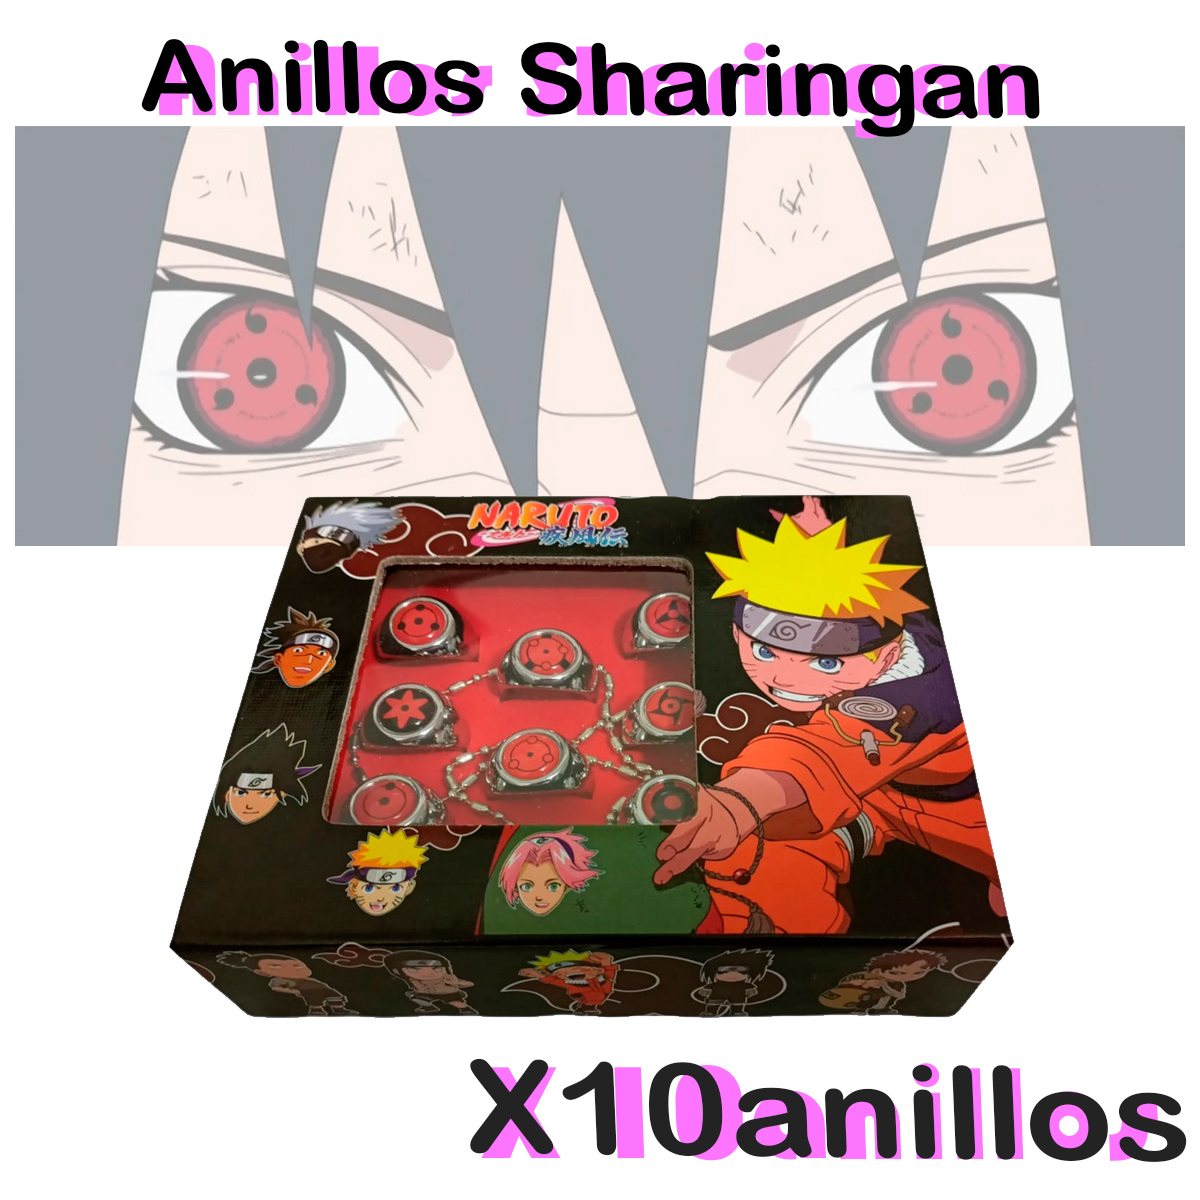 Anillo Con Sharingan Cosplay Anime Naruto Sasuke 10 Piezas